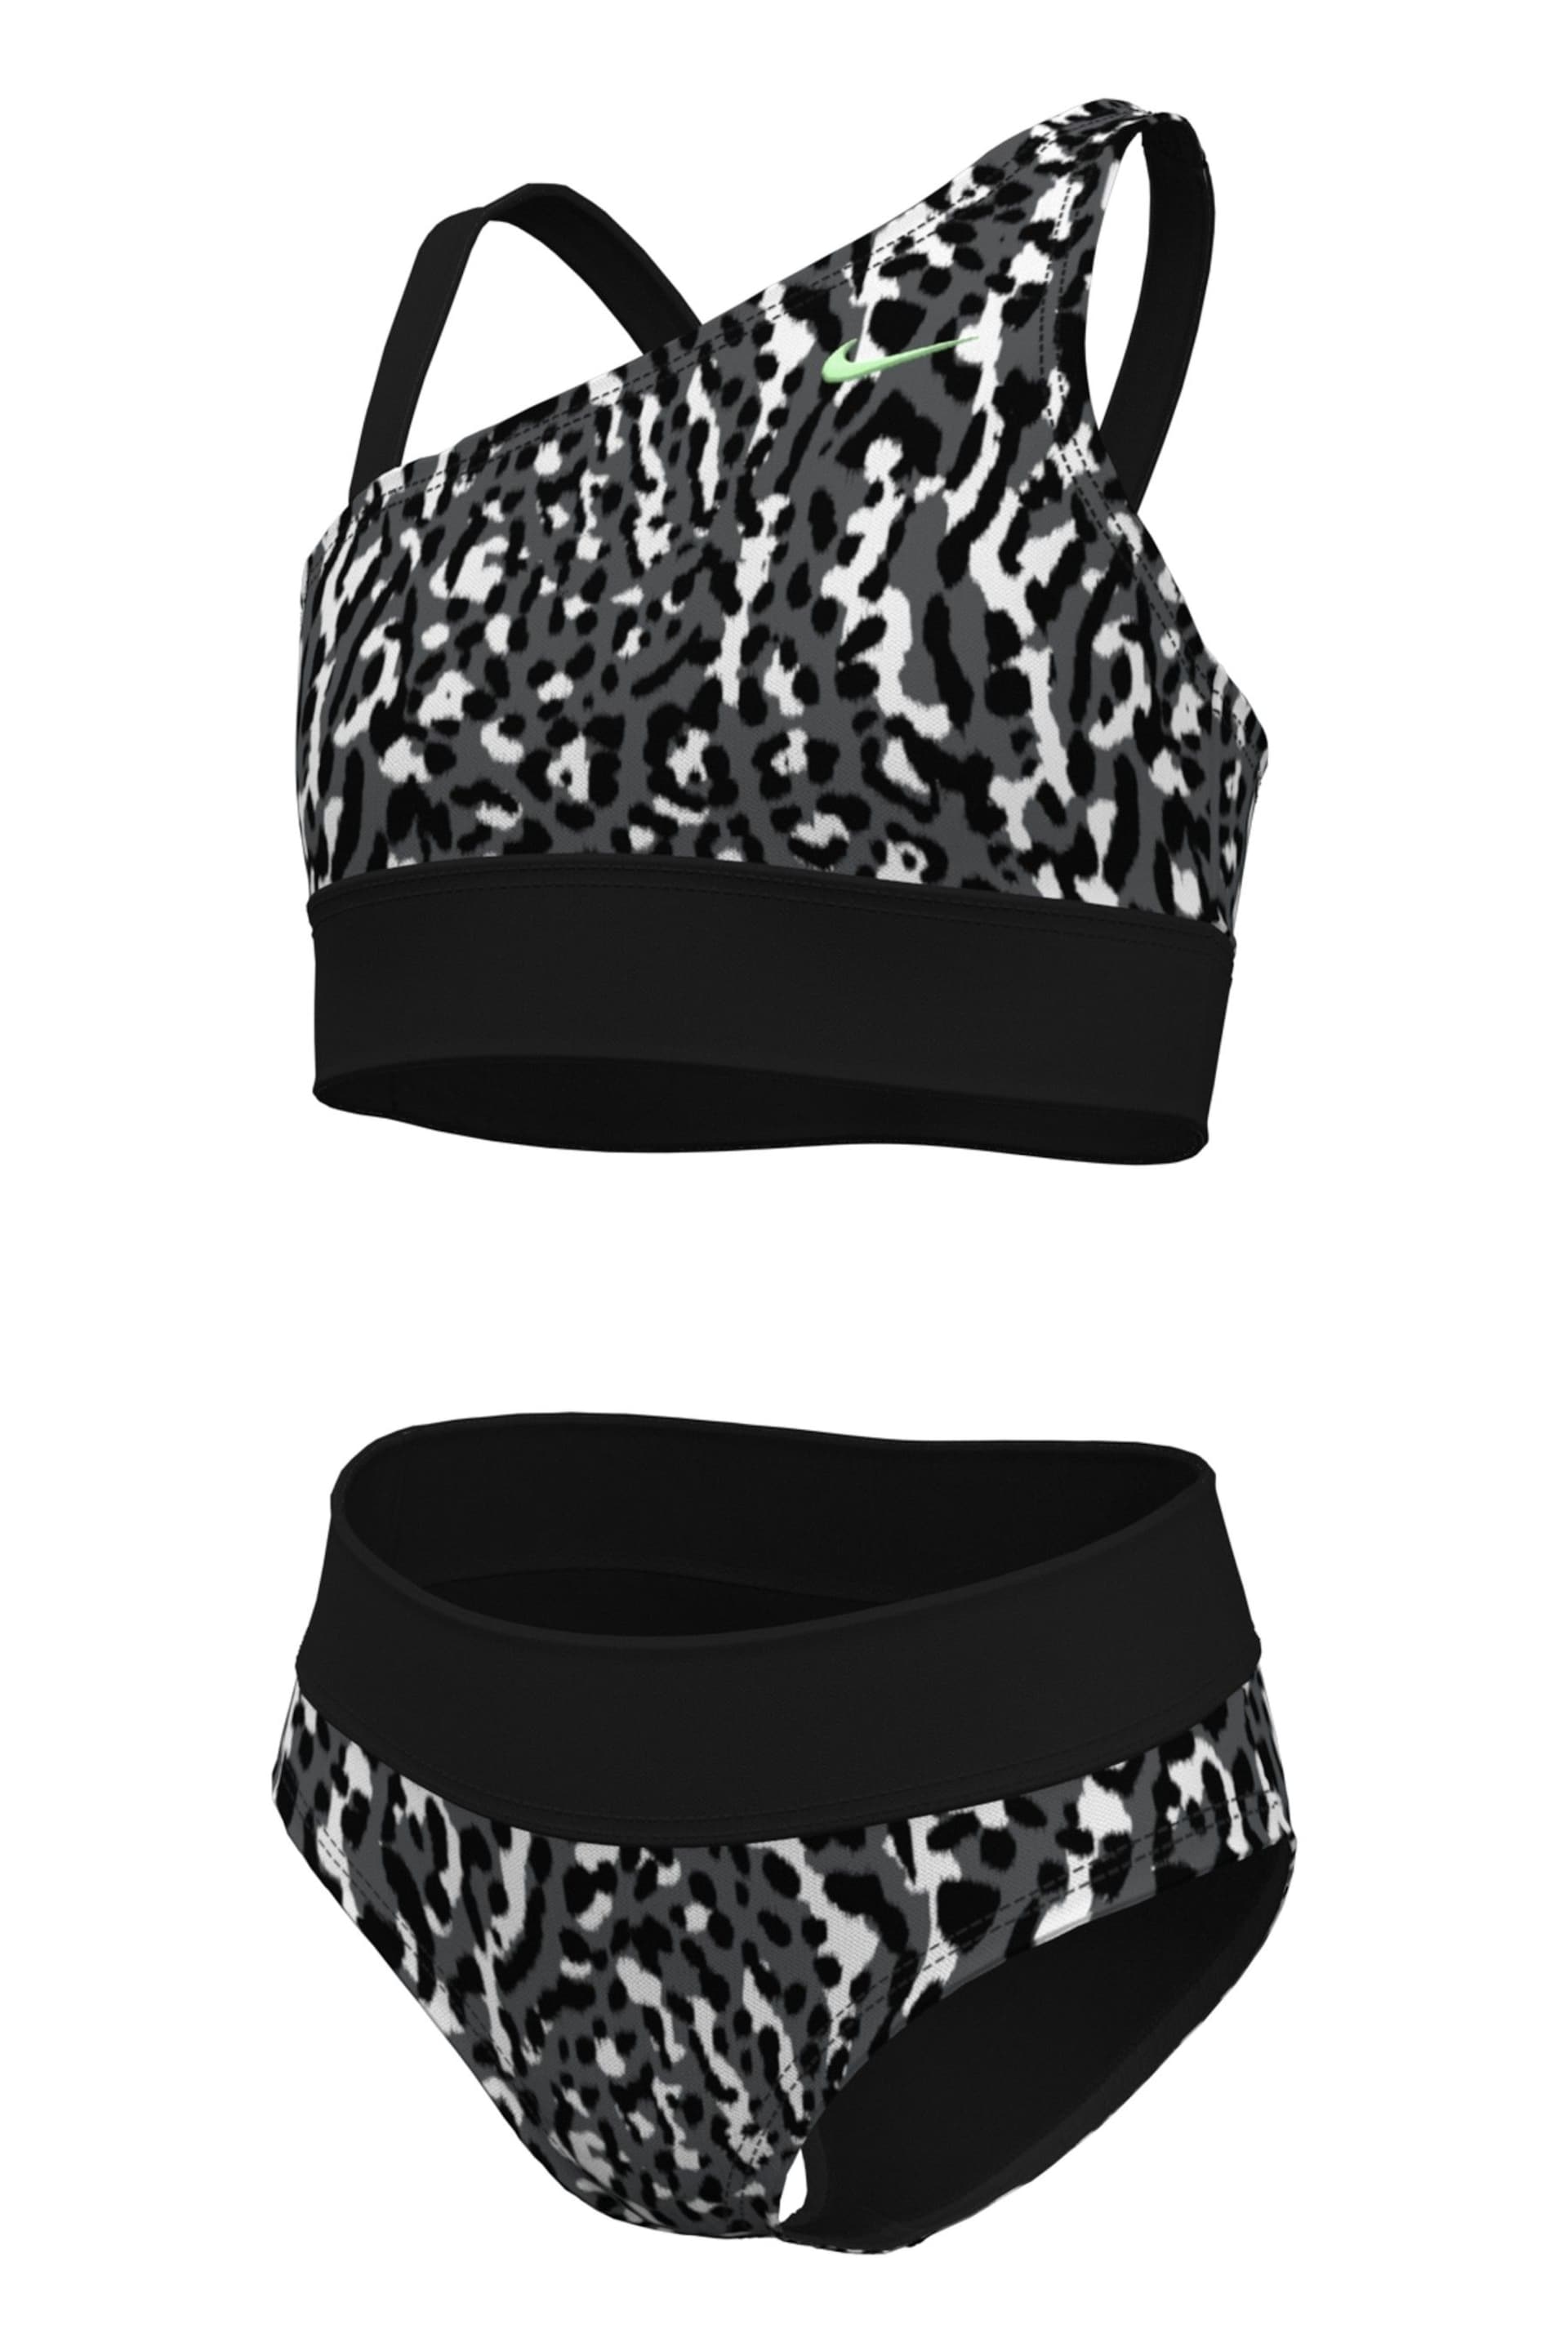 Nike Black Animal Print Asymmetrical Top Bikini Set - Image 5 of 5